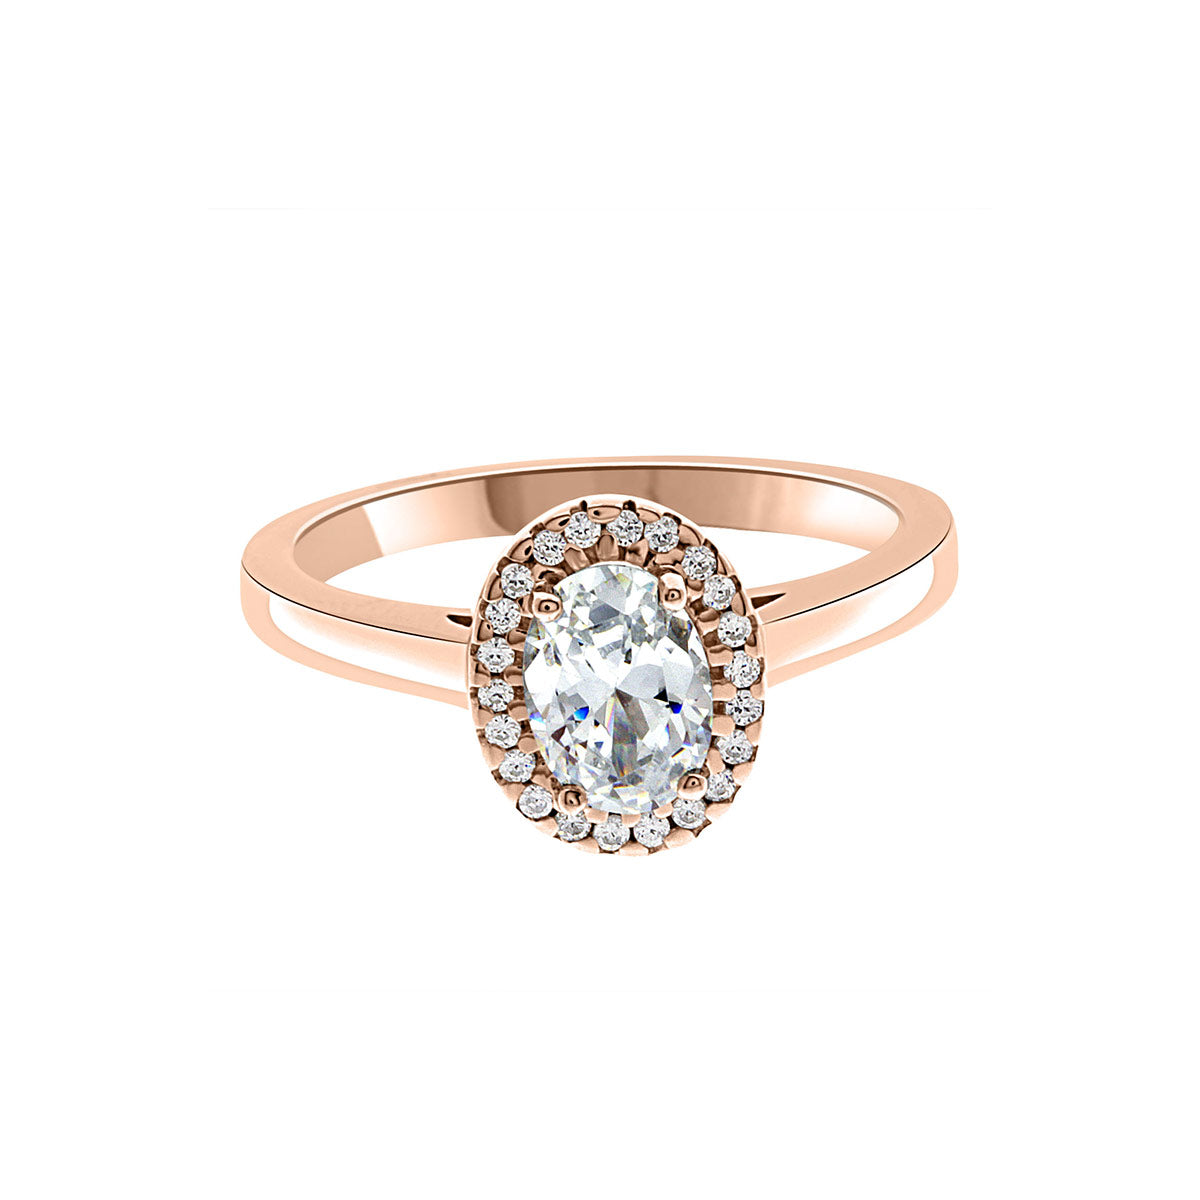 Oval Vintage Engagement Ring in rose gold